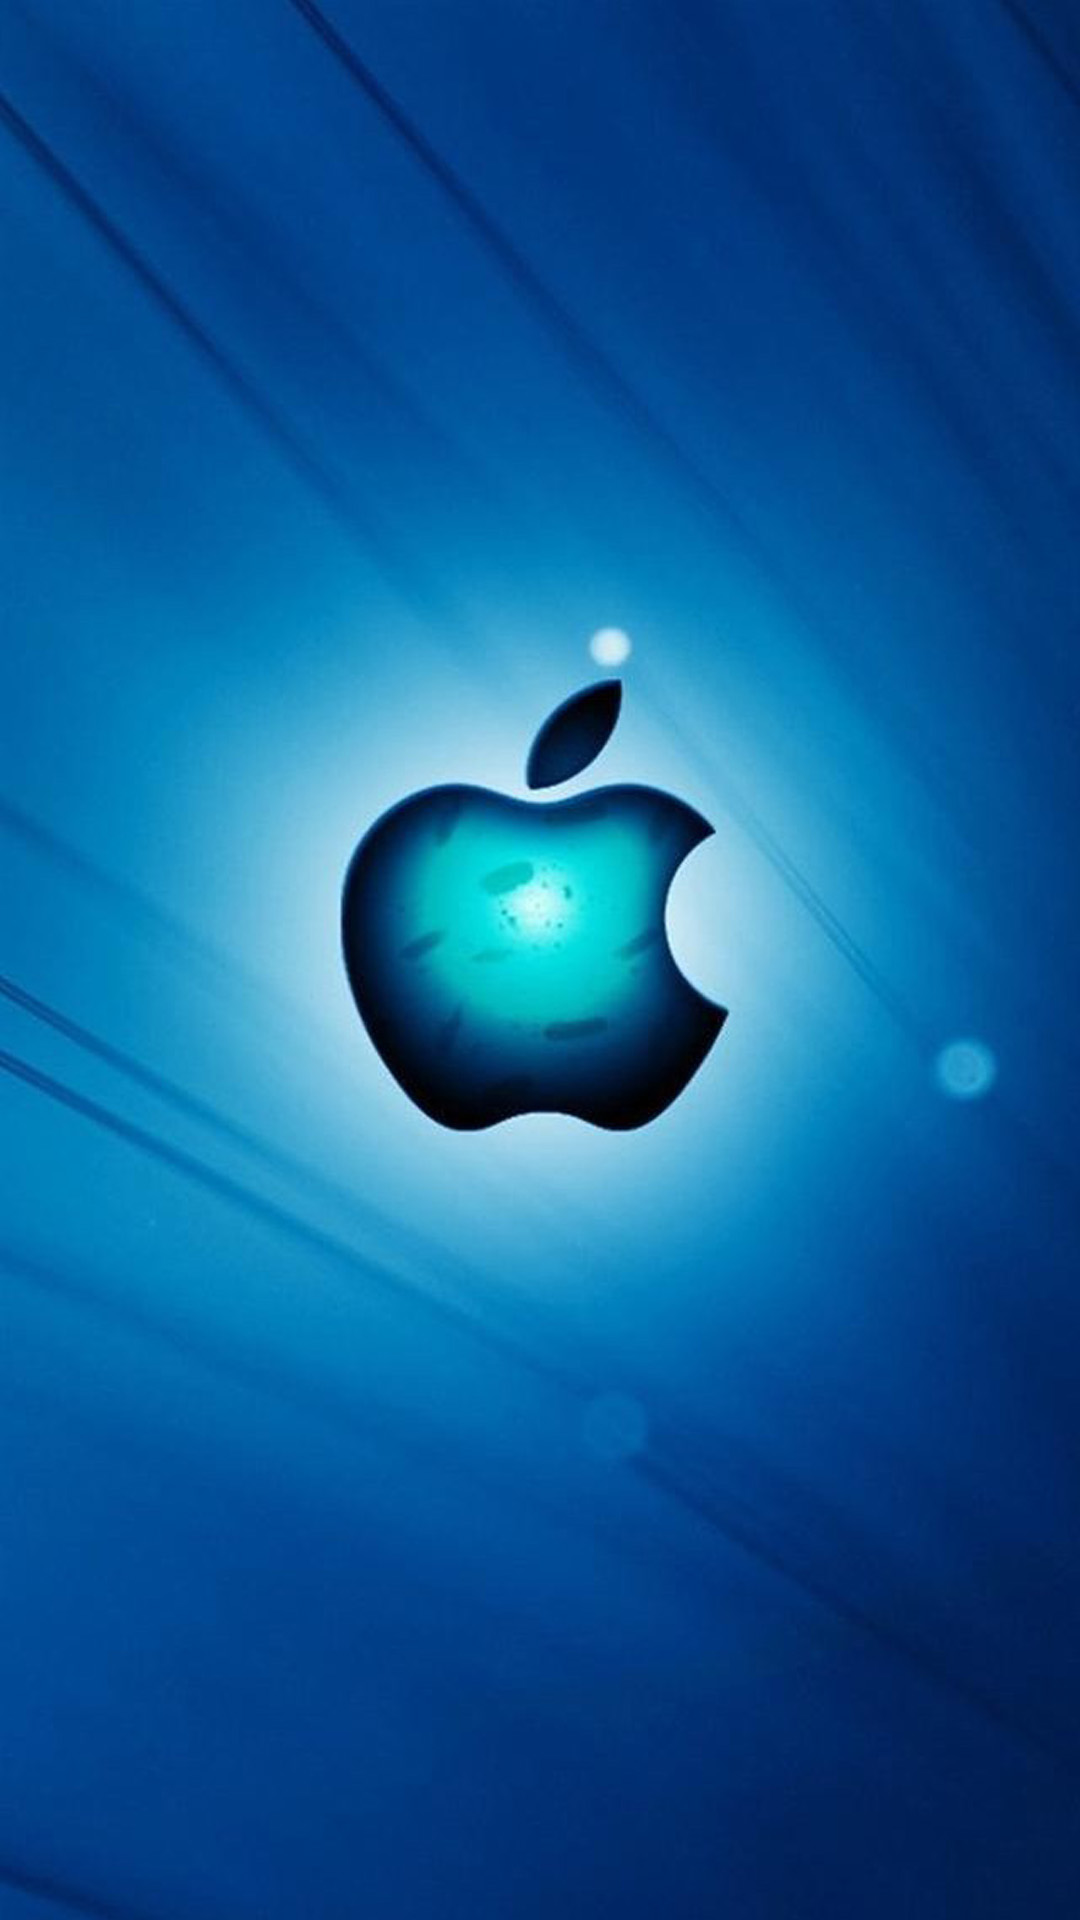 Download Free Apple Logo Background for Iphone | PixelsTalk.Net